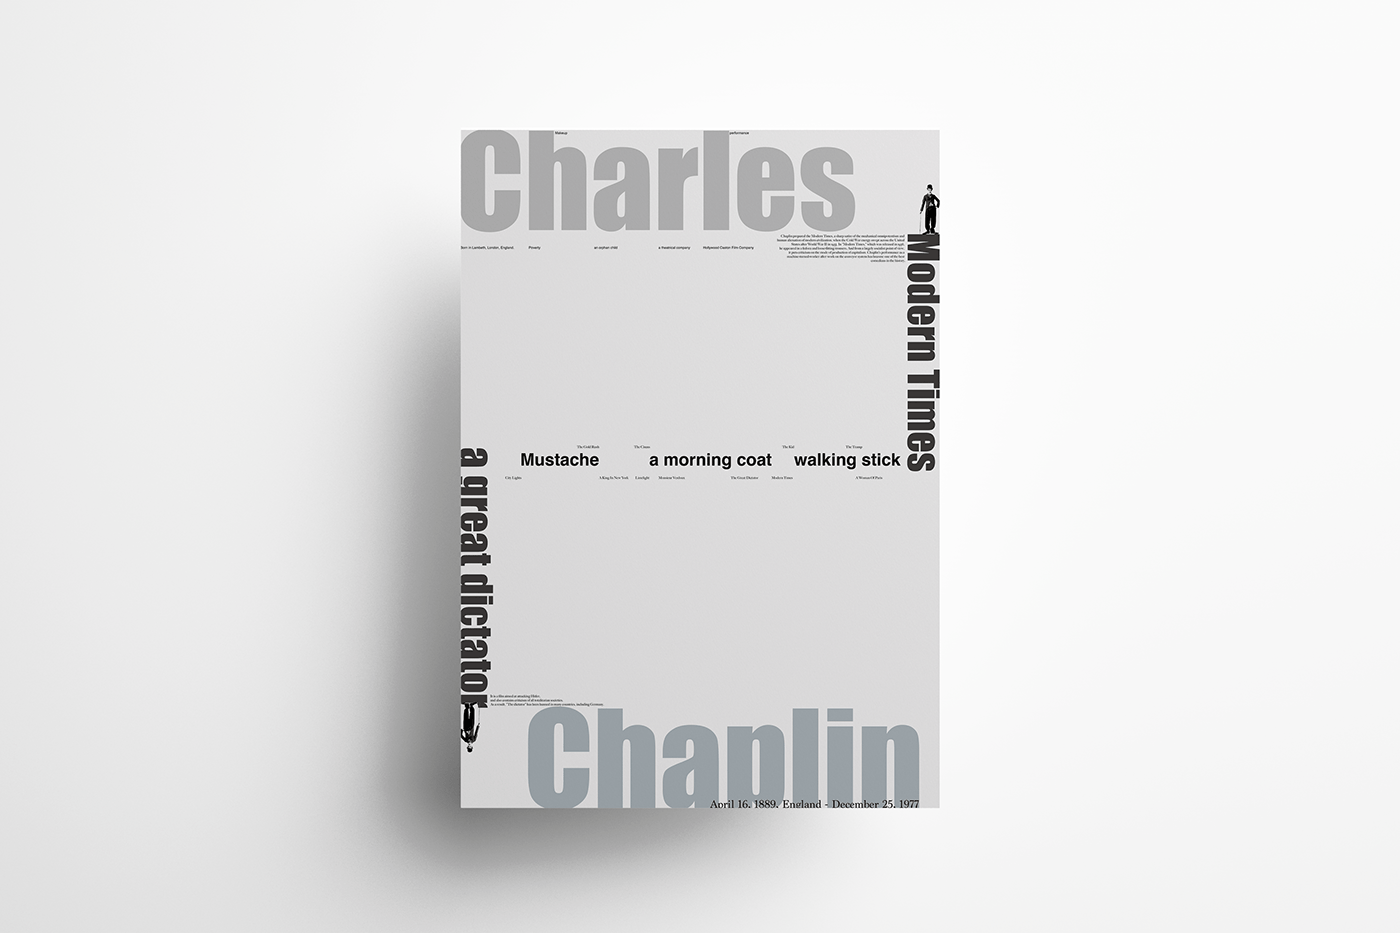 Charles Chaplin poster typo